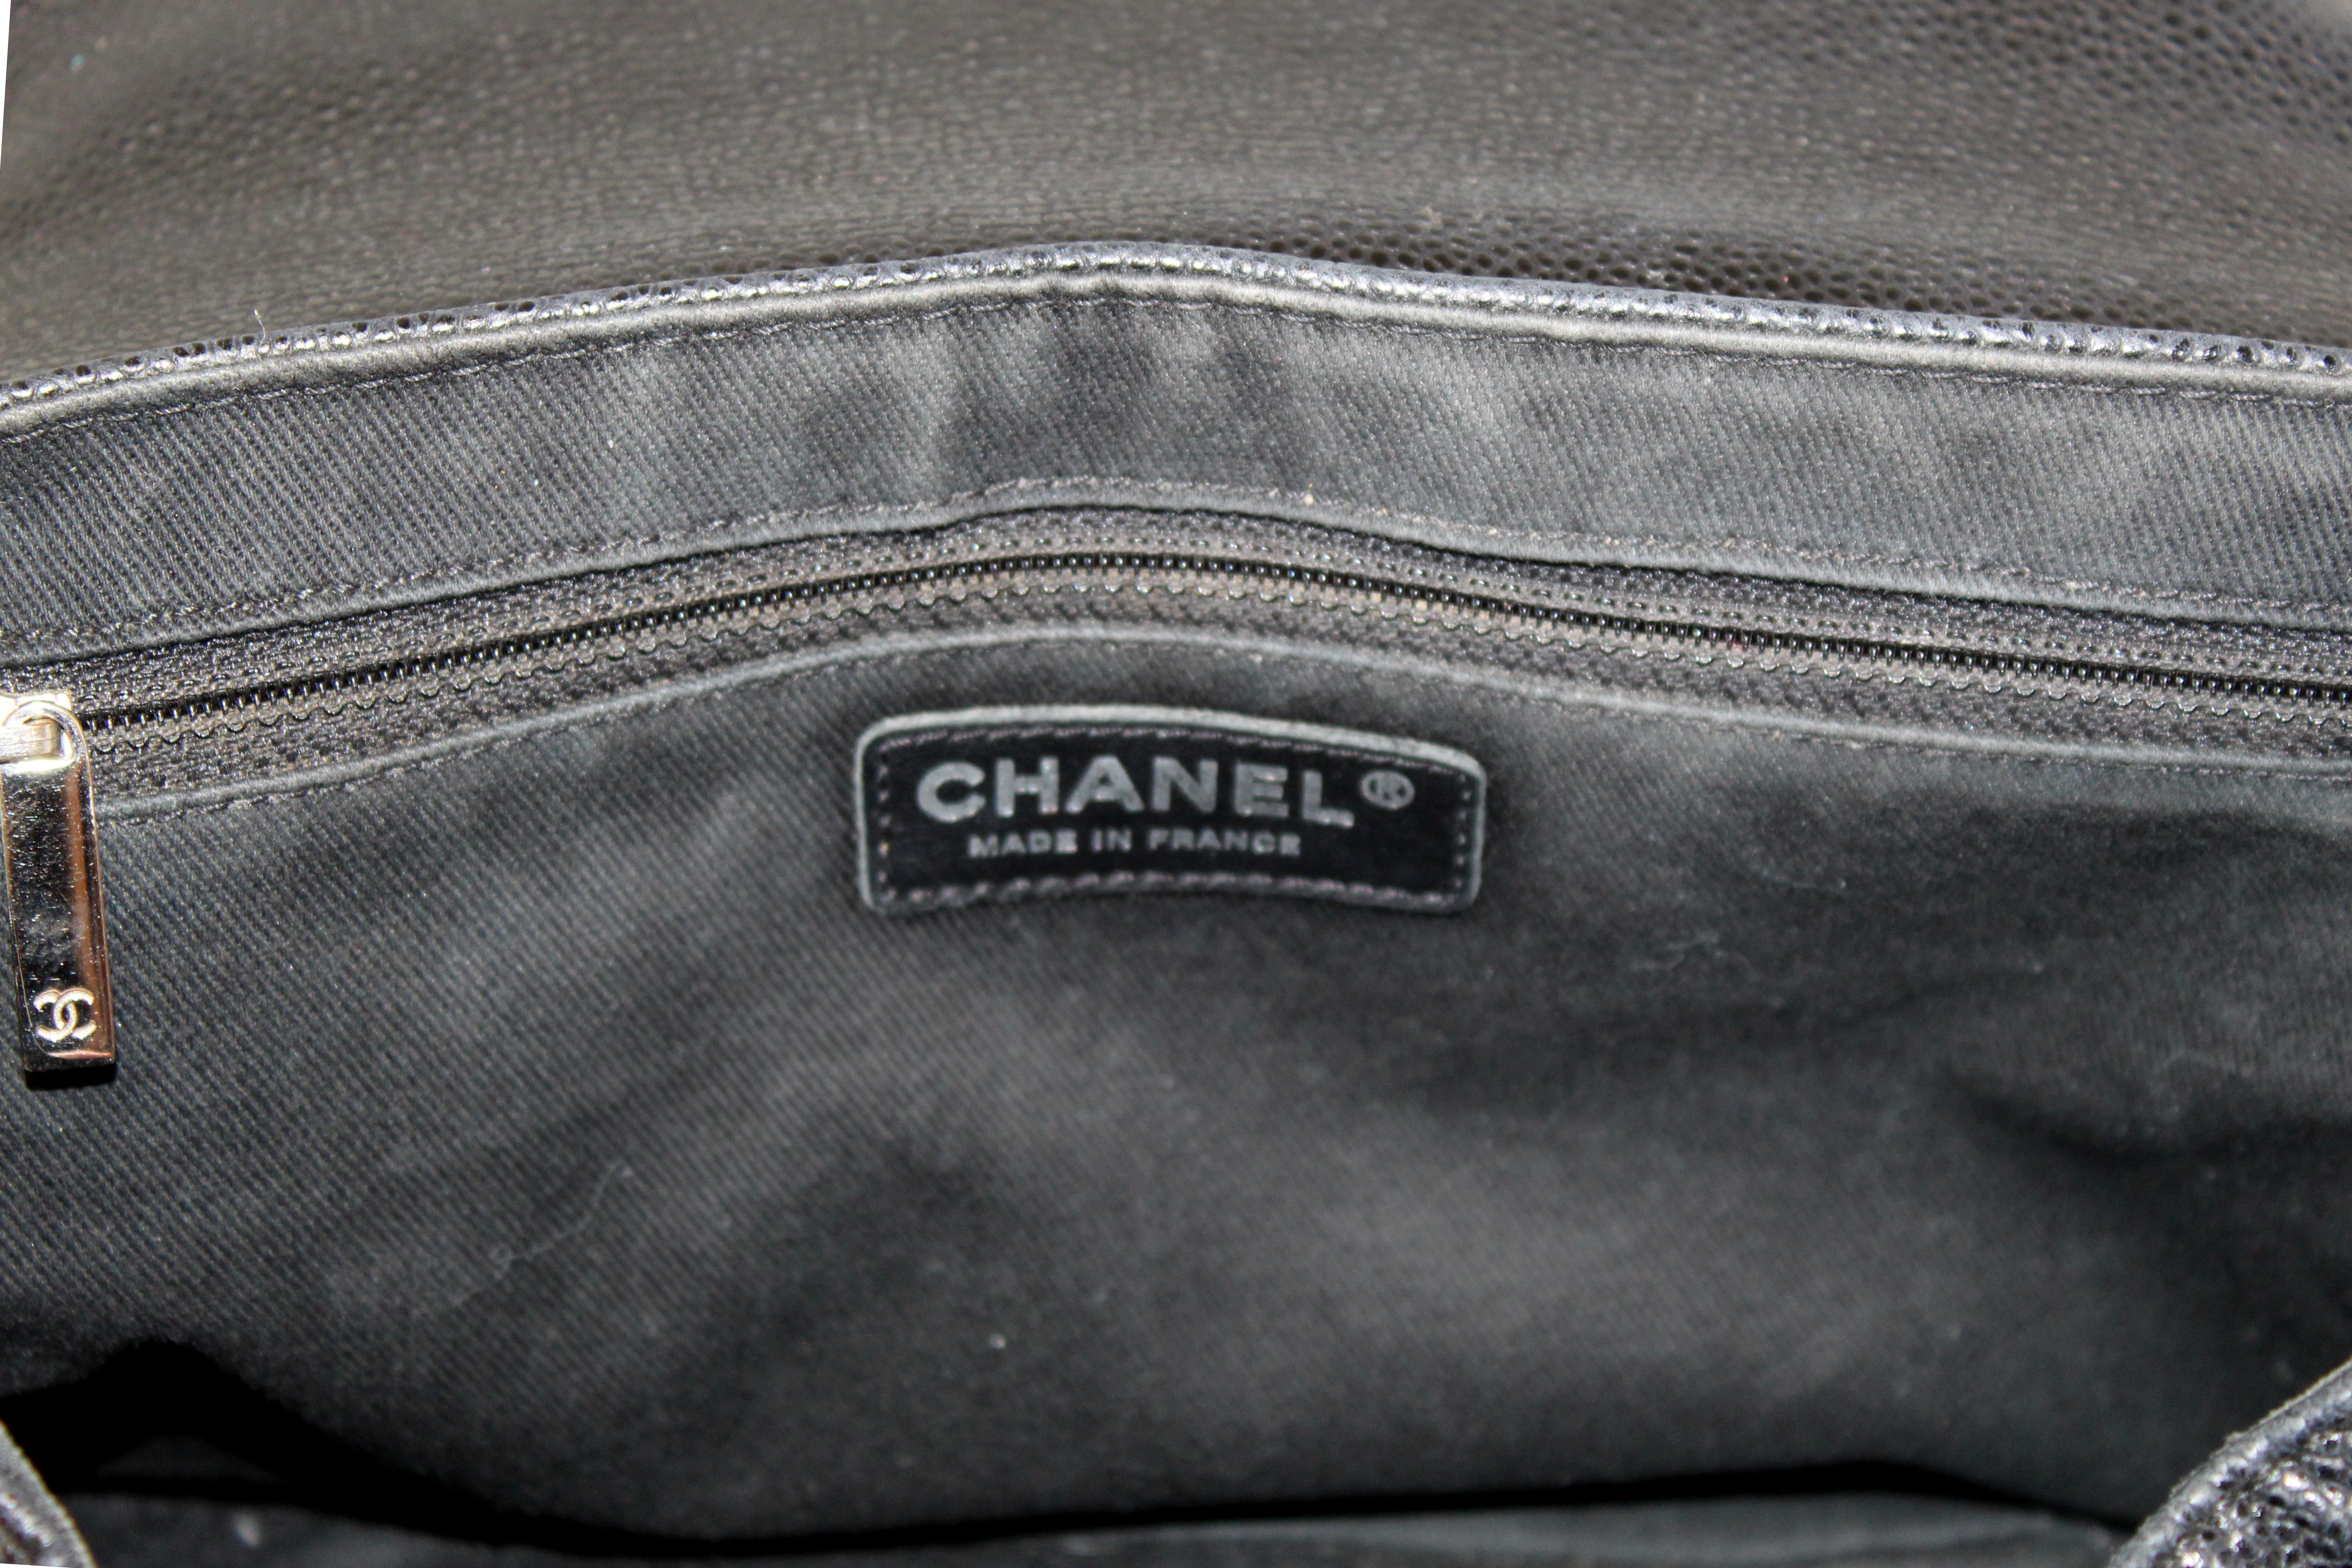 Chanel Black Caviar Leather Half Moon Hobo Bag with Gold Hardware., Lot  #77009